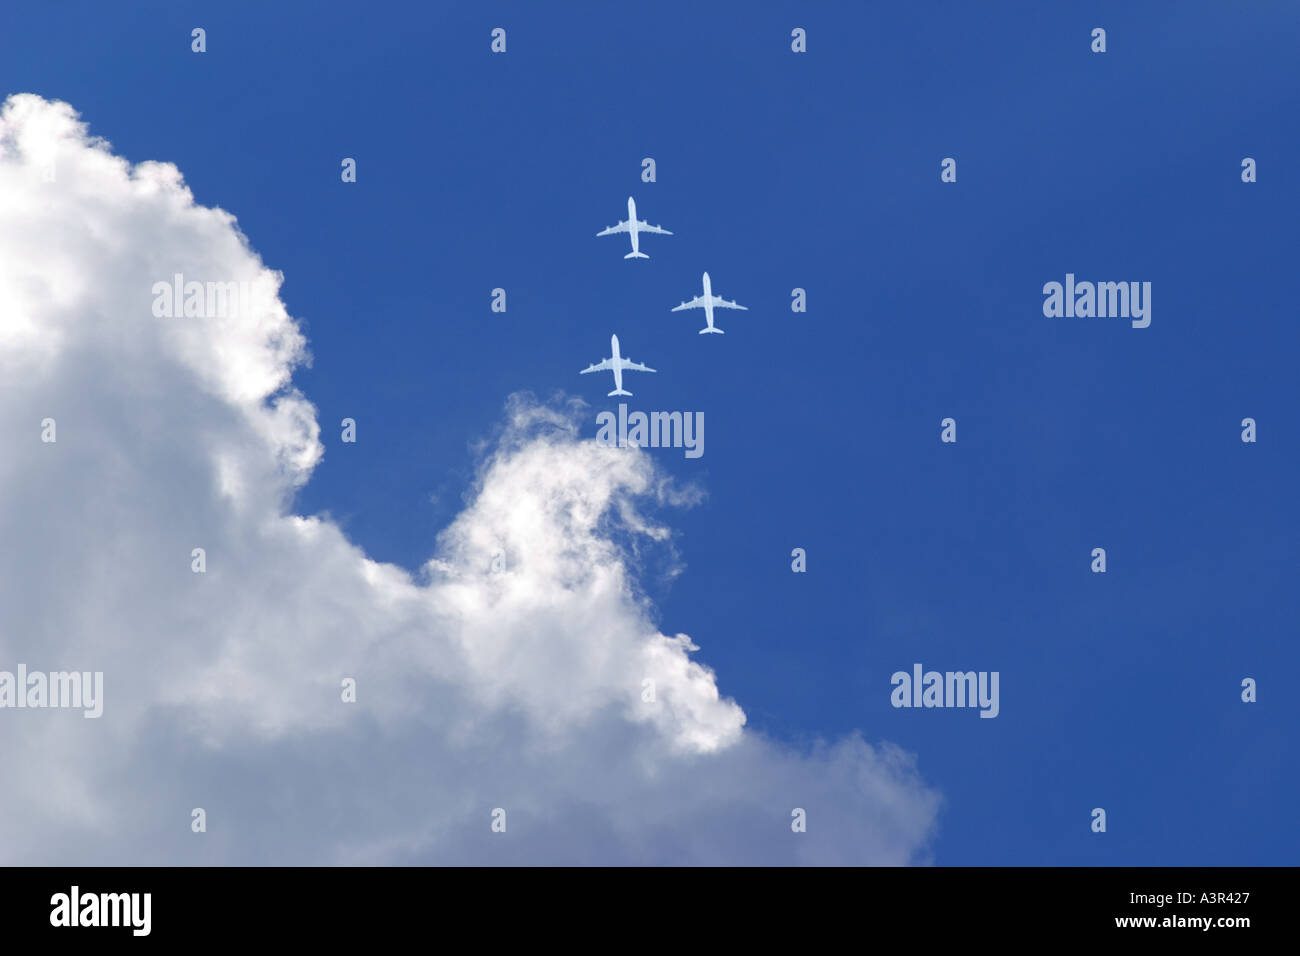 three white passenger airplanes in blue sky Stock Photo